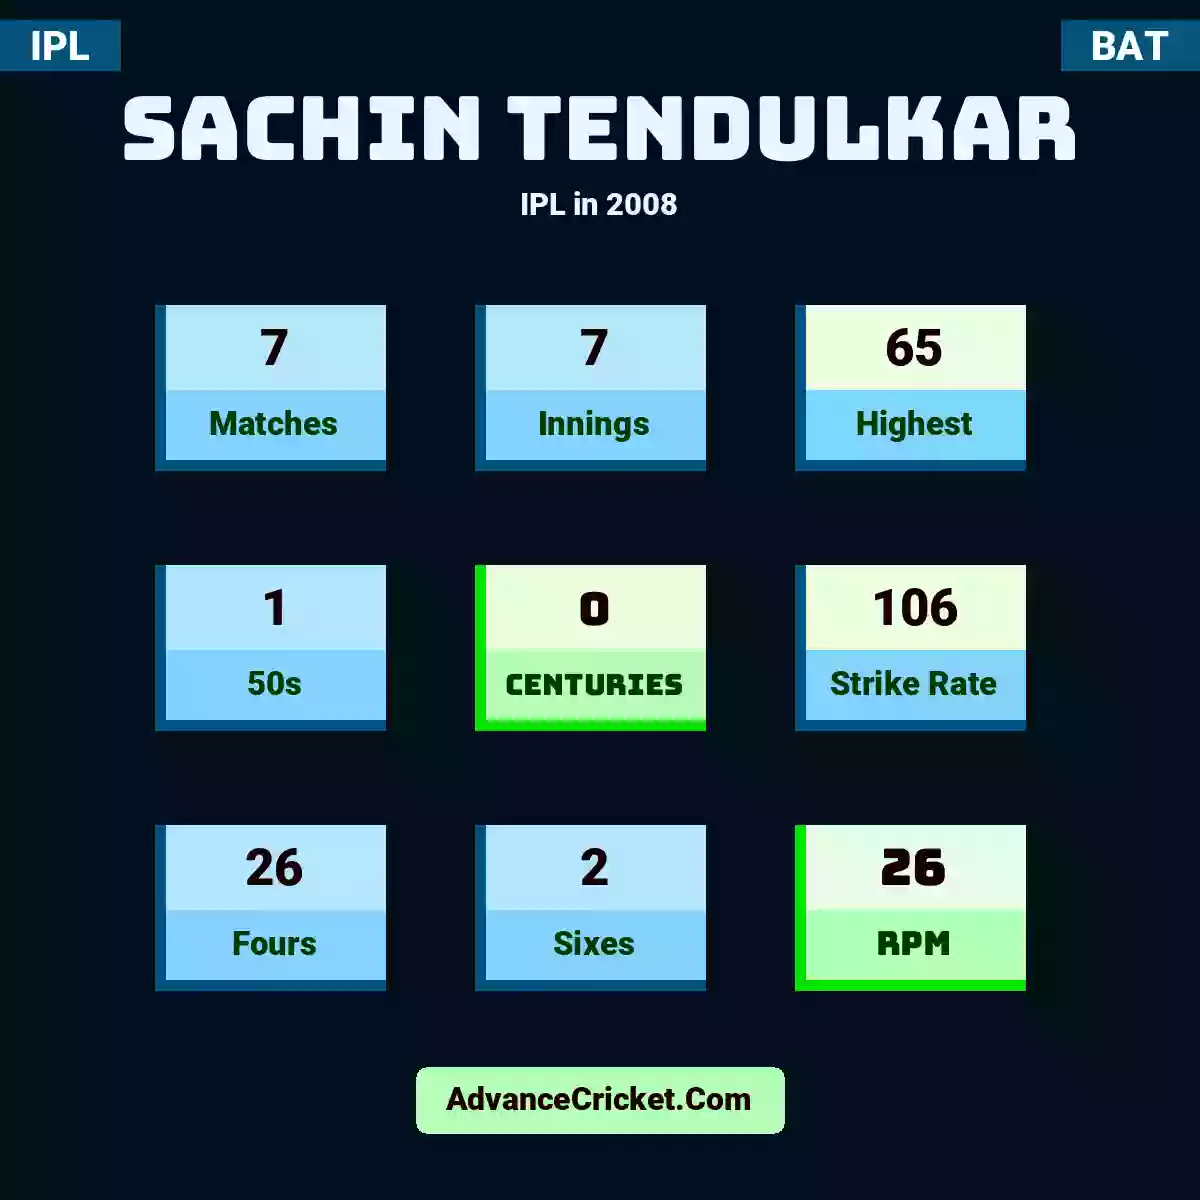 Sachin Tendulkar IPL  in 2008, Sachin Tendulkar played 7 matches, scored 65 runs as highest, 1 half-centuries, and 0 centuries, with a strike rate of 106. S.Tendulkar hit 26 fours and 2 sixes, with an RPM of 26.